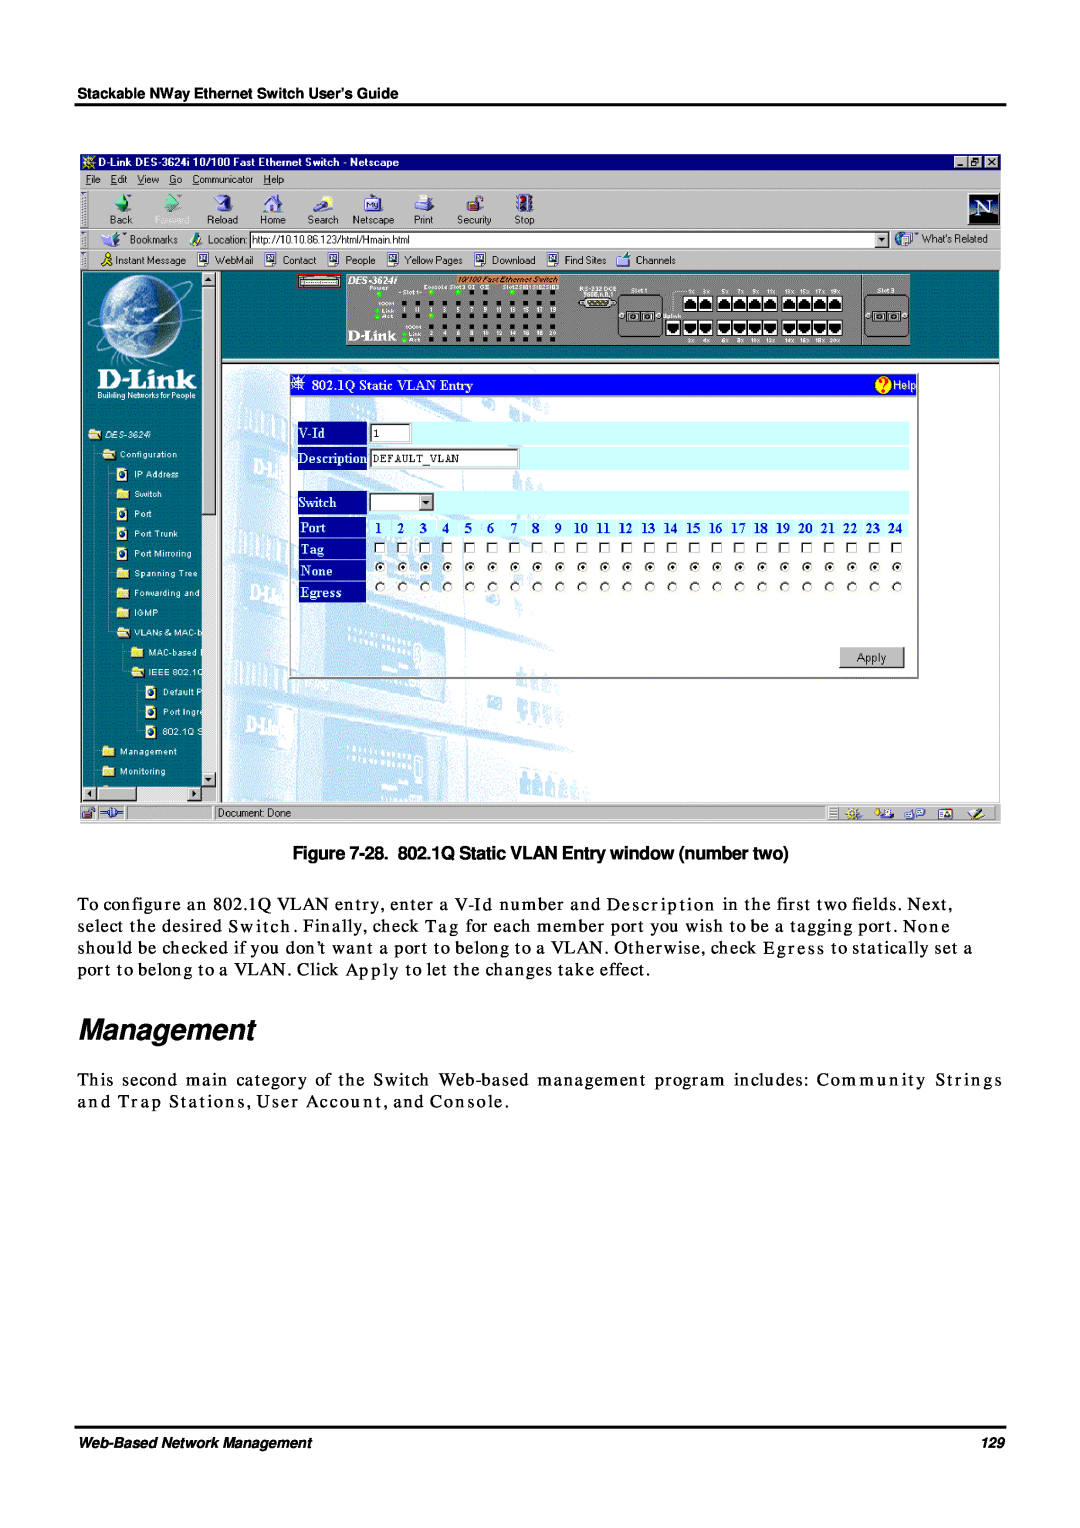 D-Link DES-3624 manual 28. 802.1Q Static VLAN Entry window number two, Management 